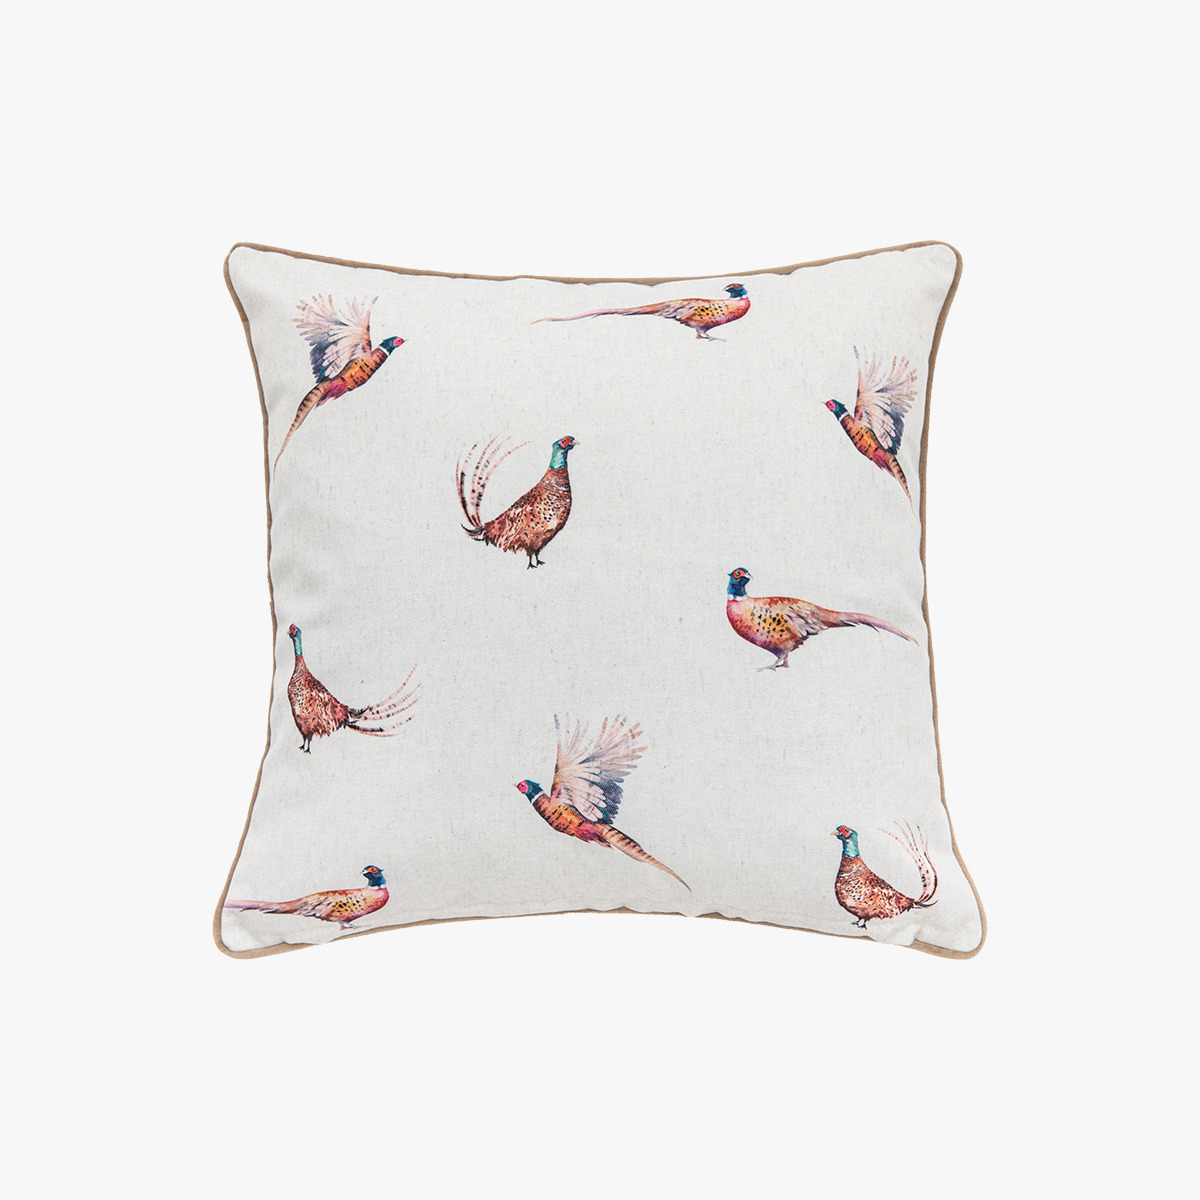 Dundee Pheasant Cushion Cover